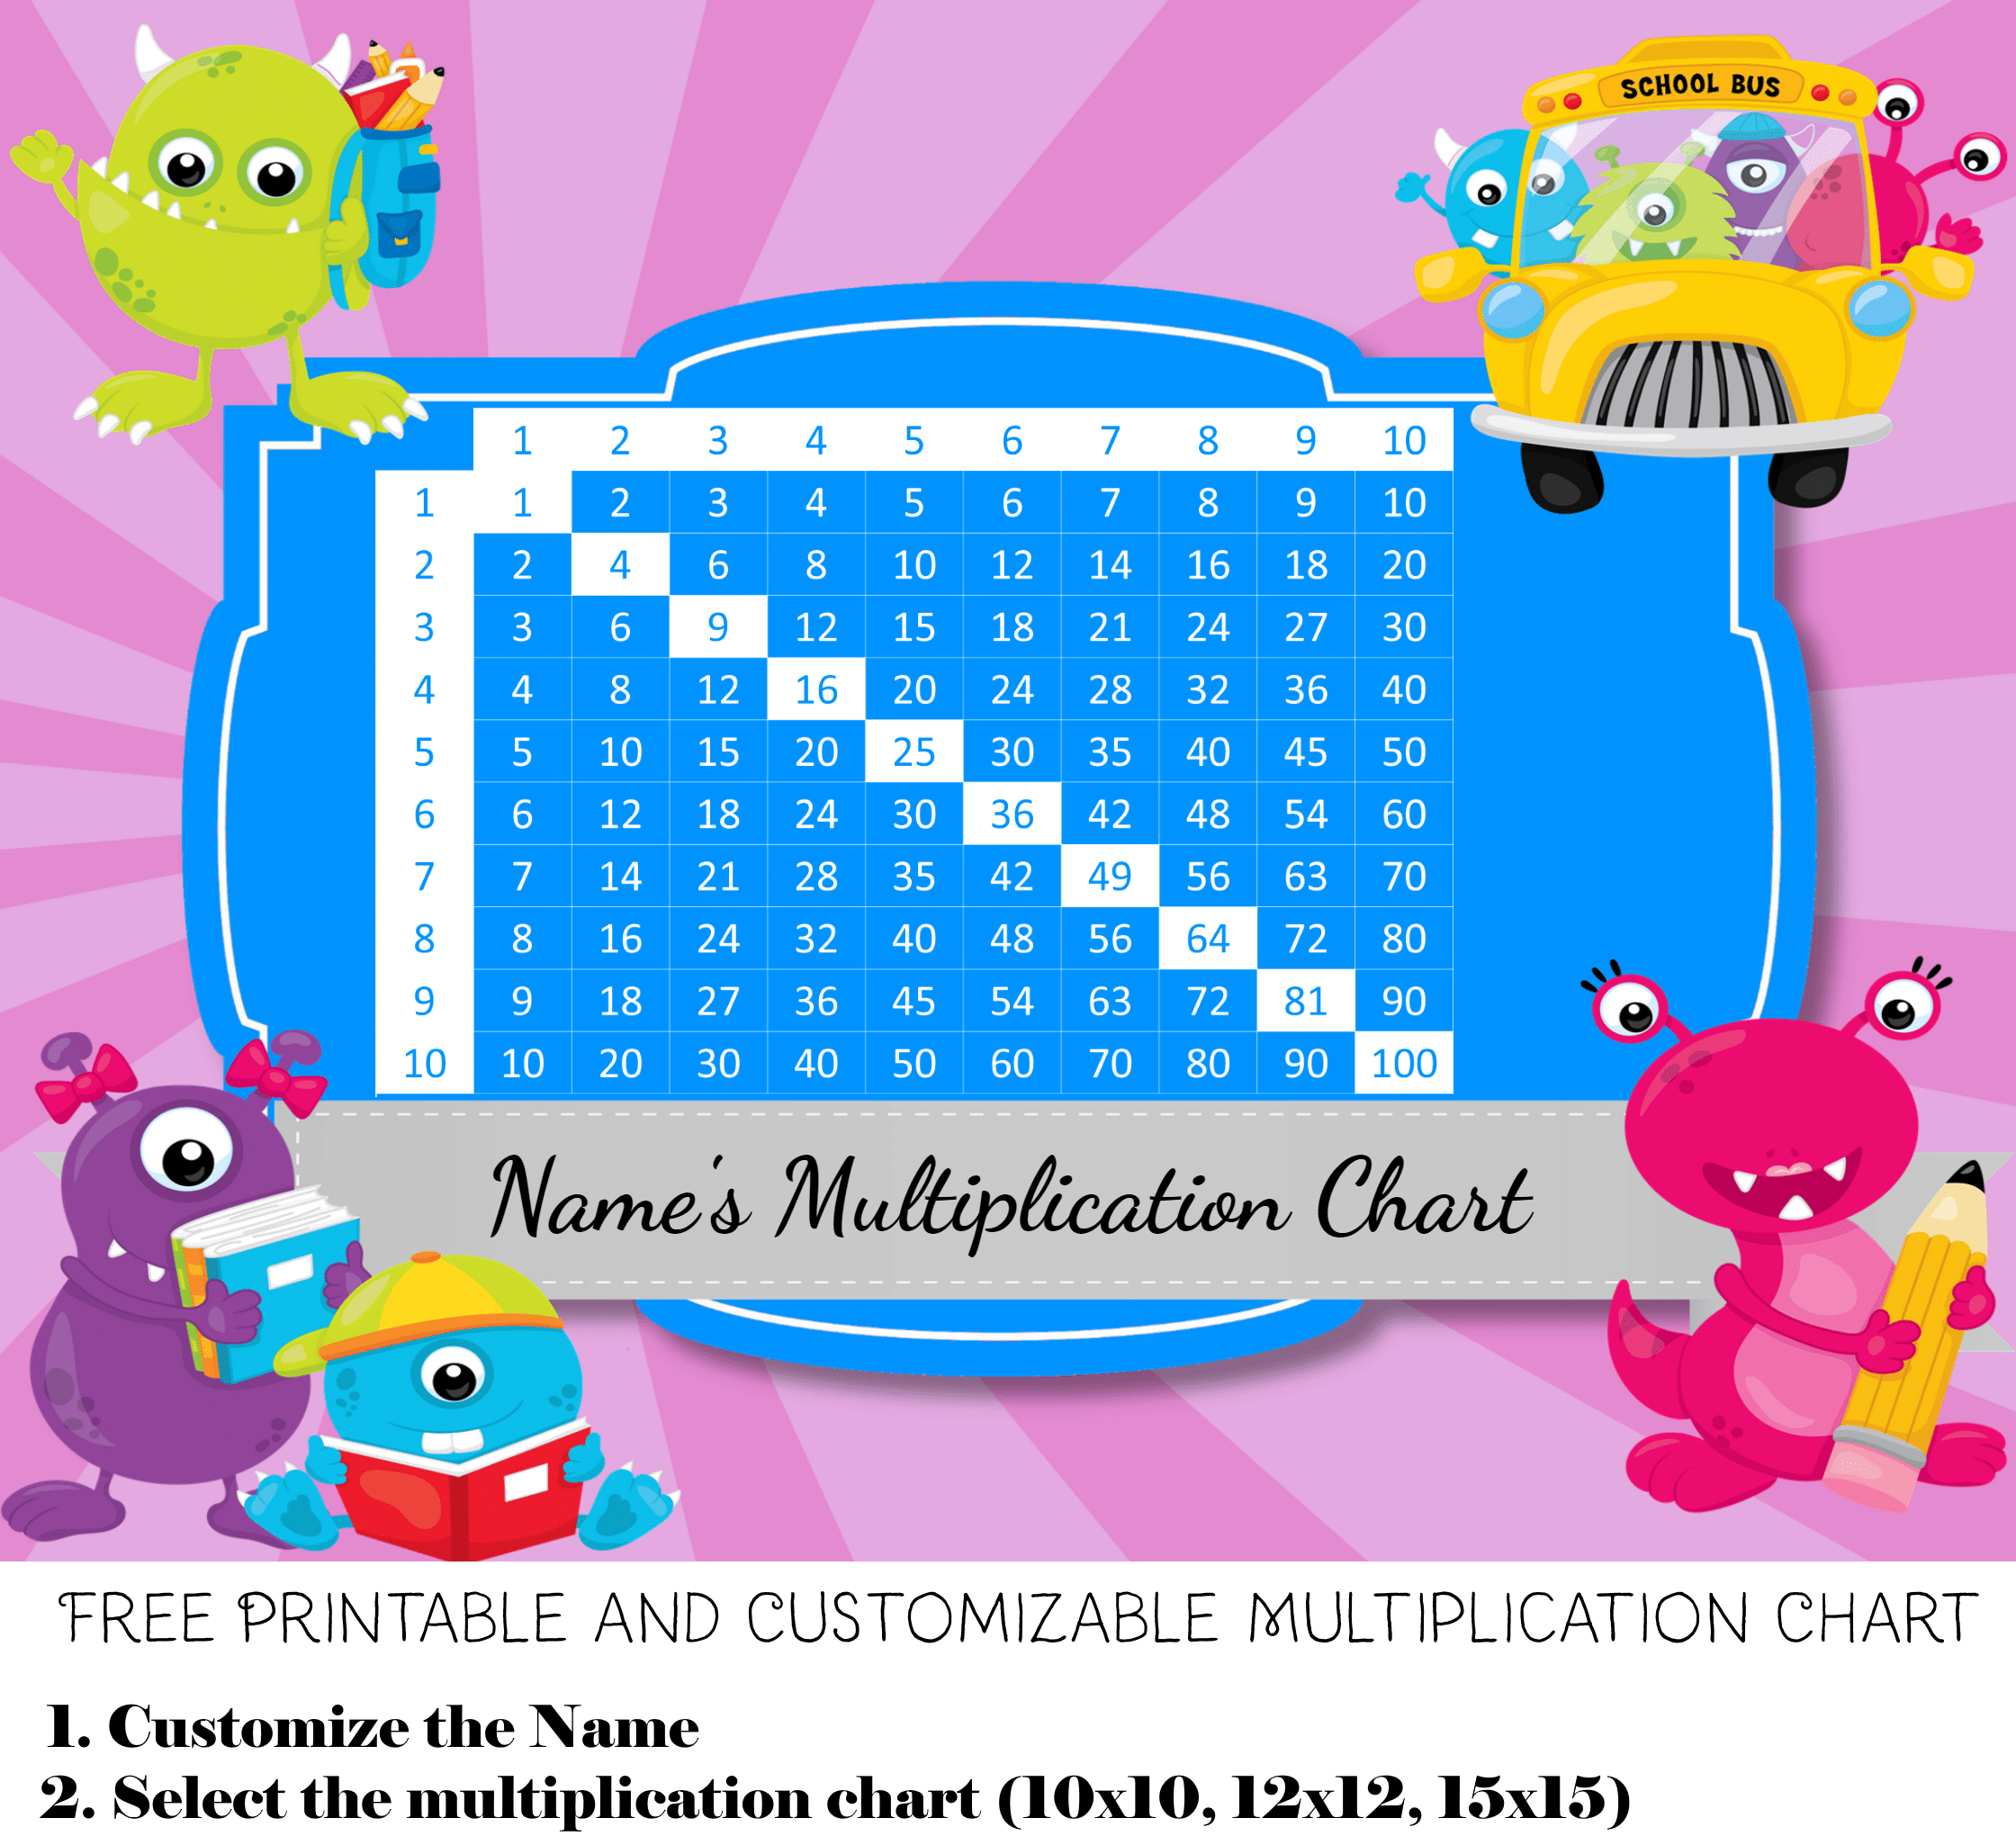 Free Custom Multiplication Chart Printable | Customize Then